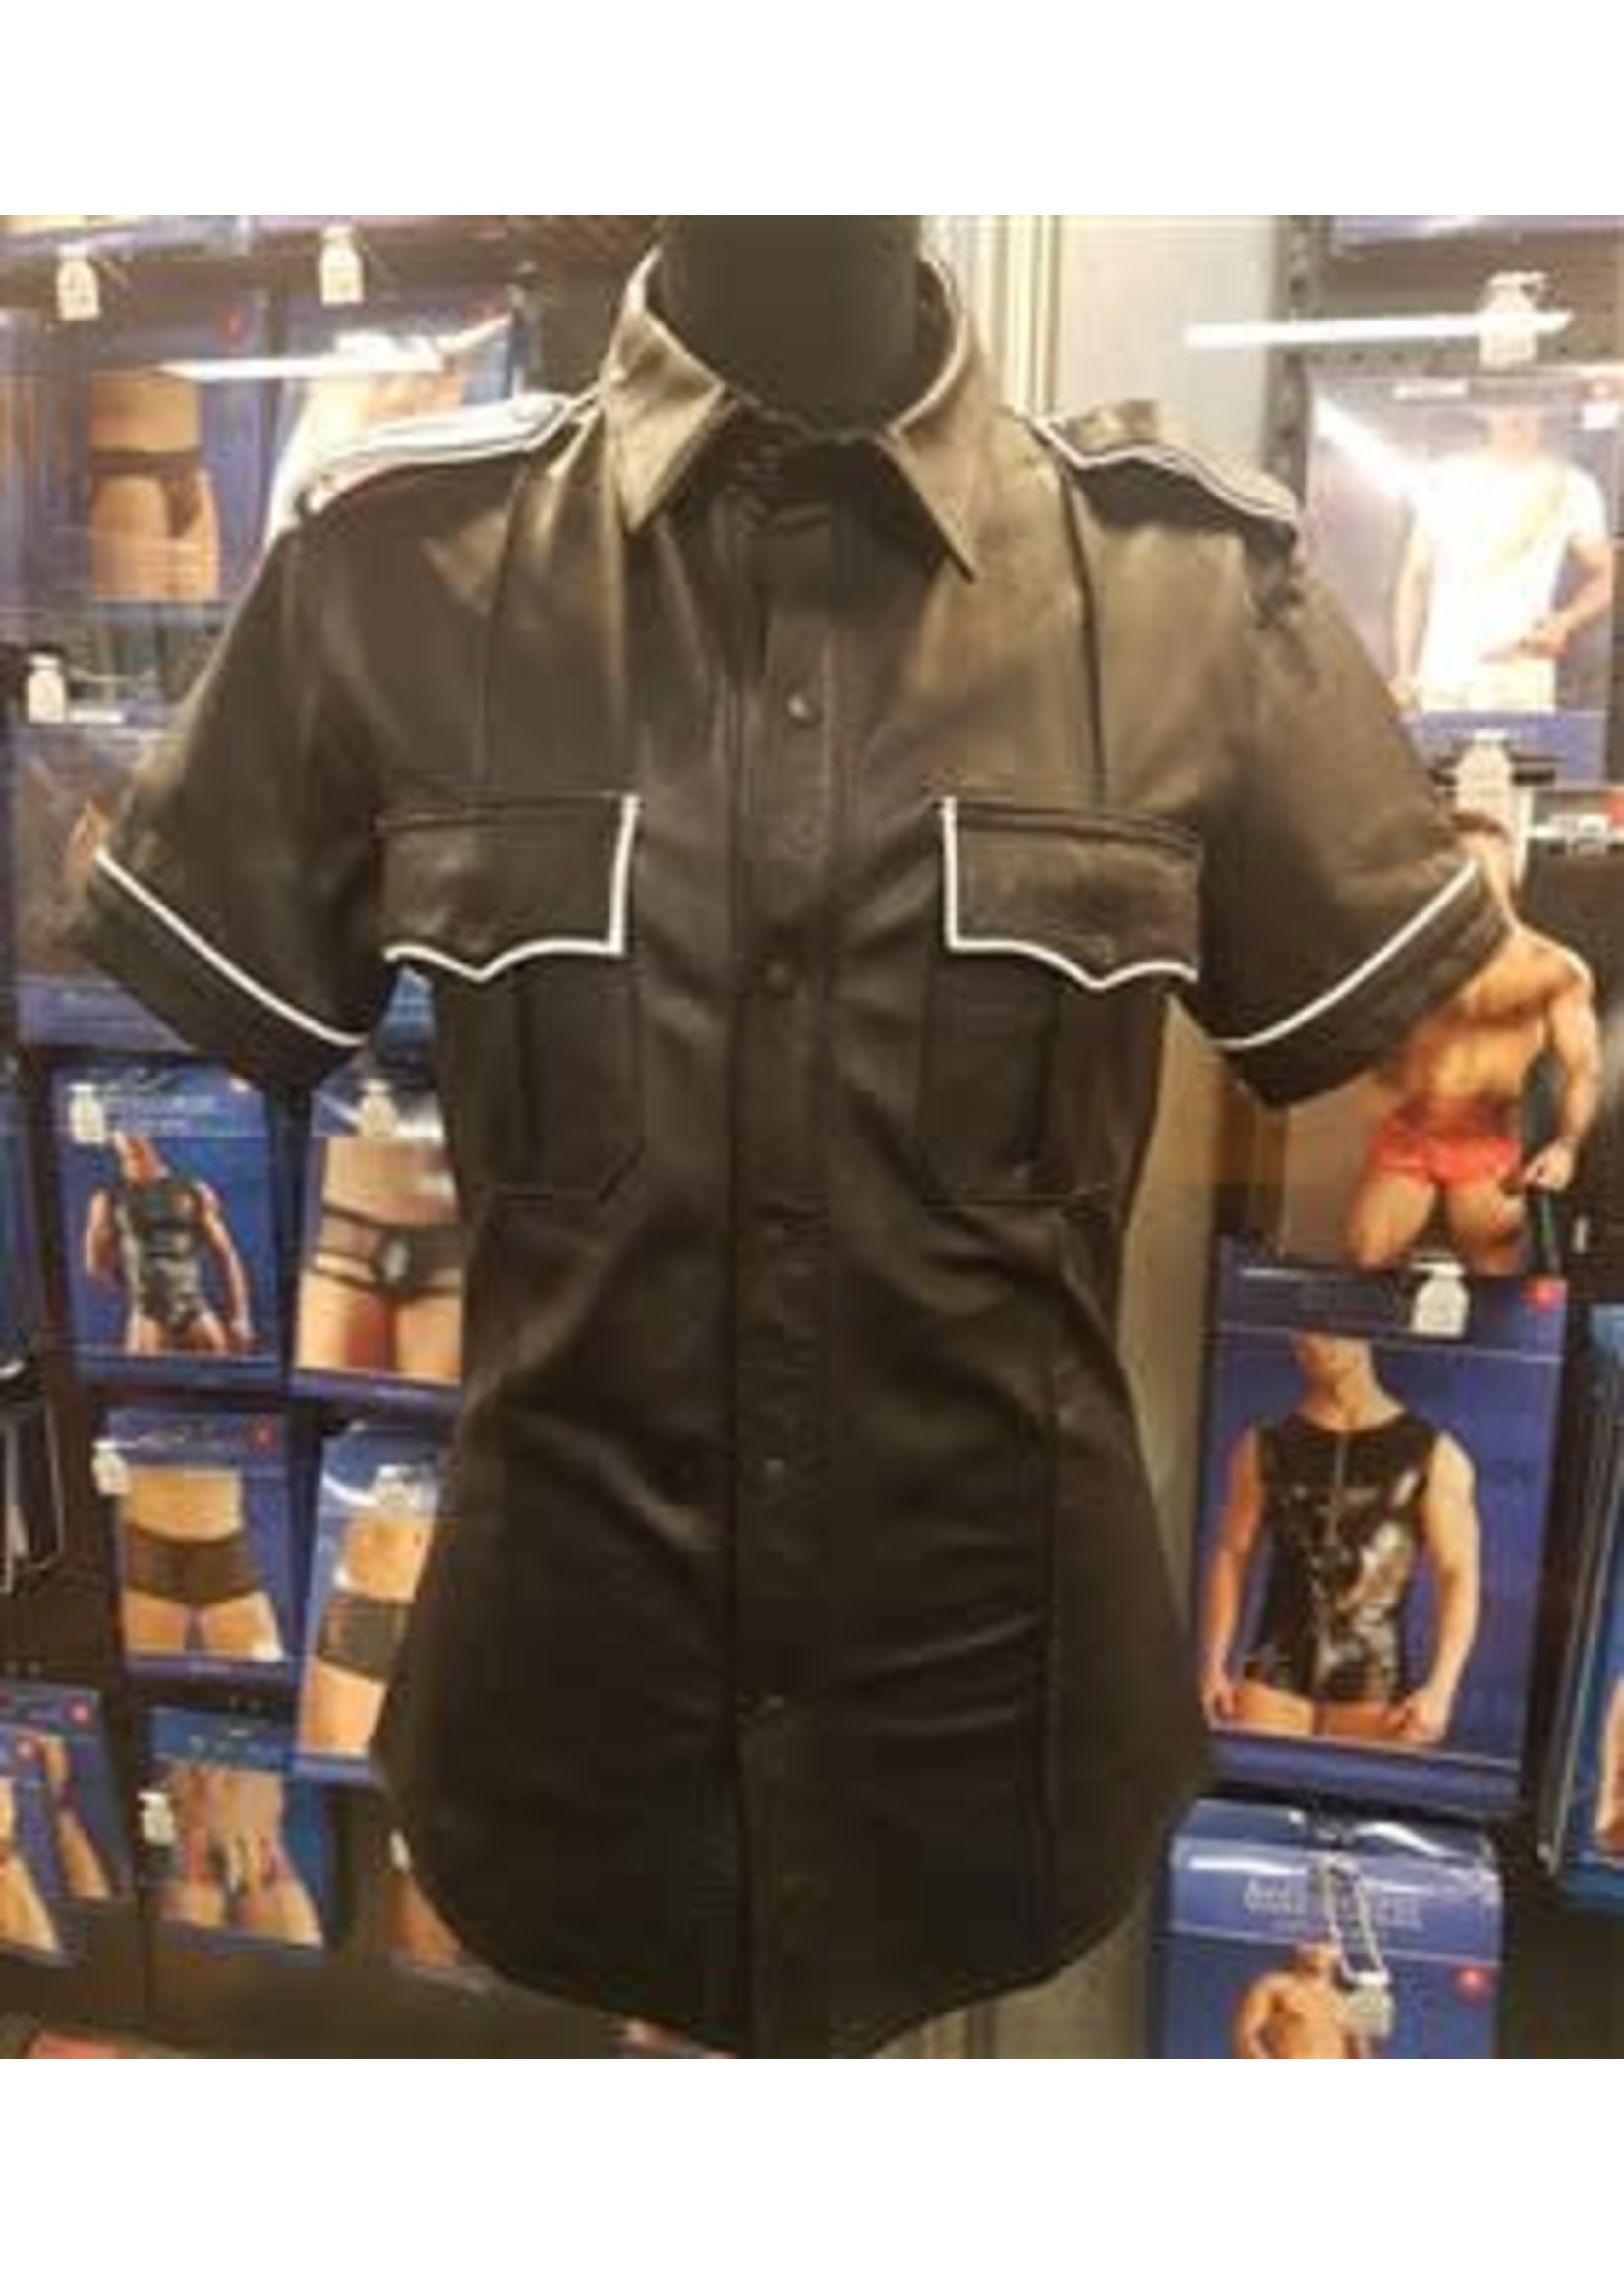 Leather uniform shirt black/white